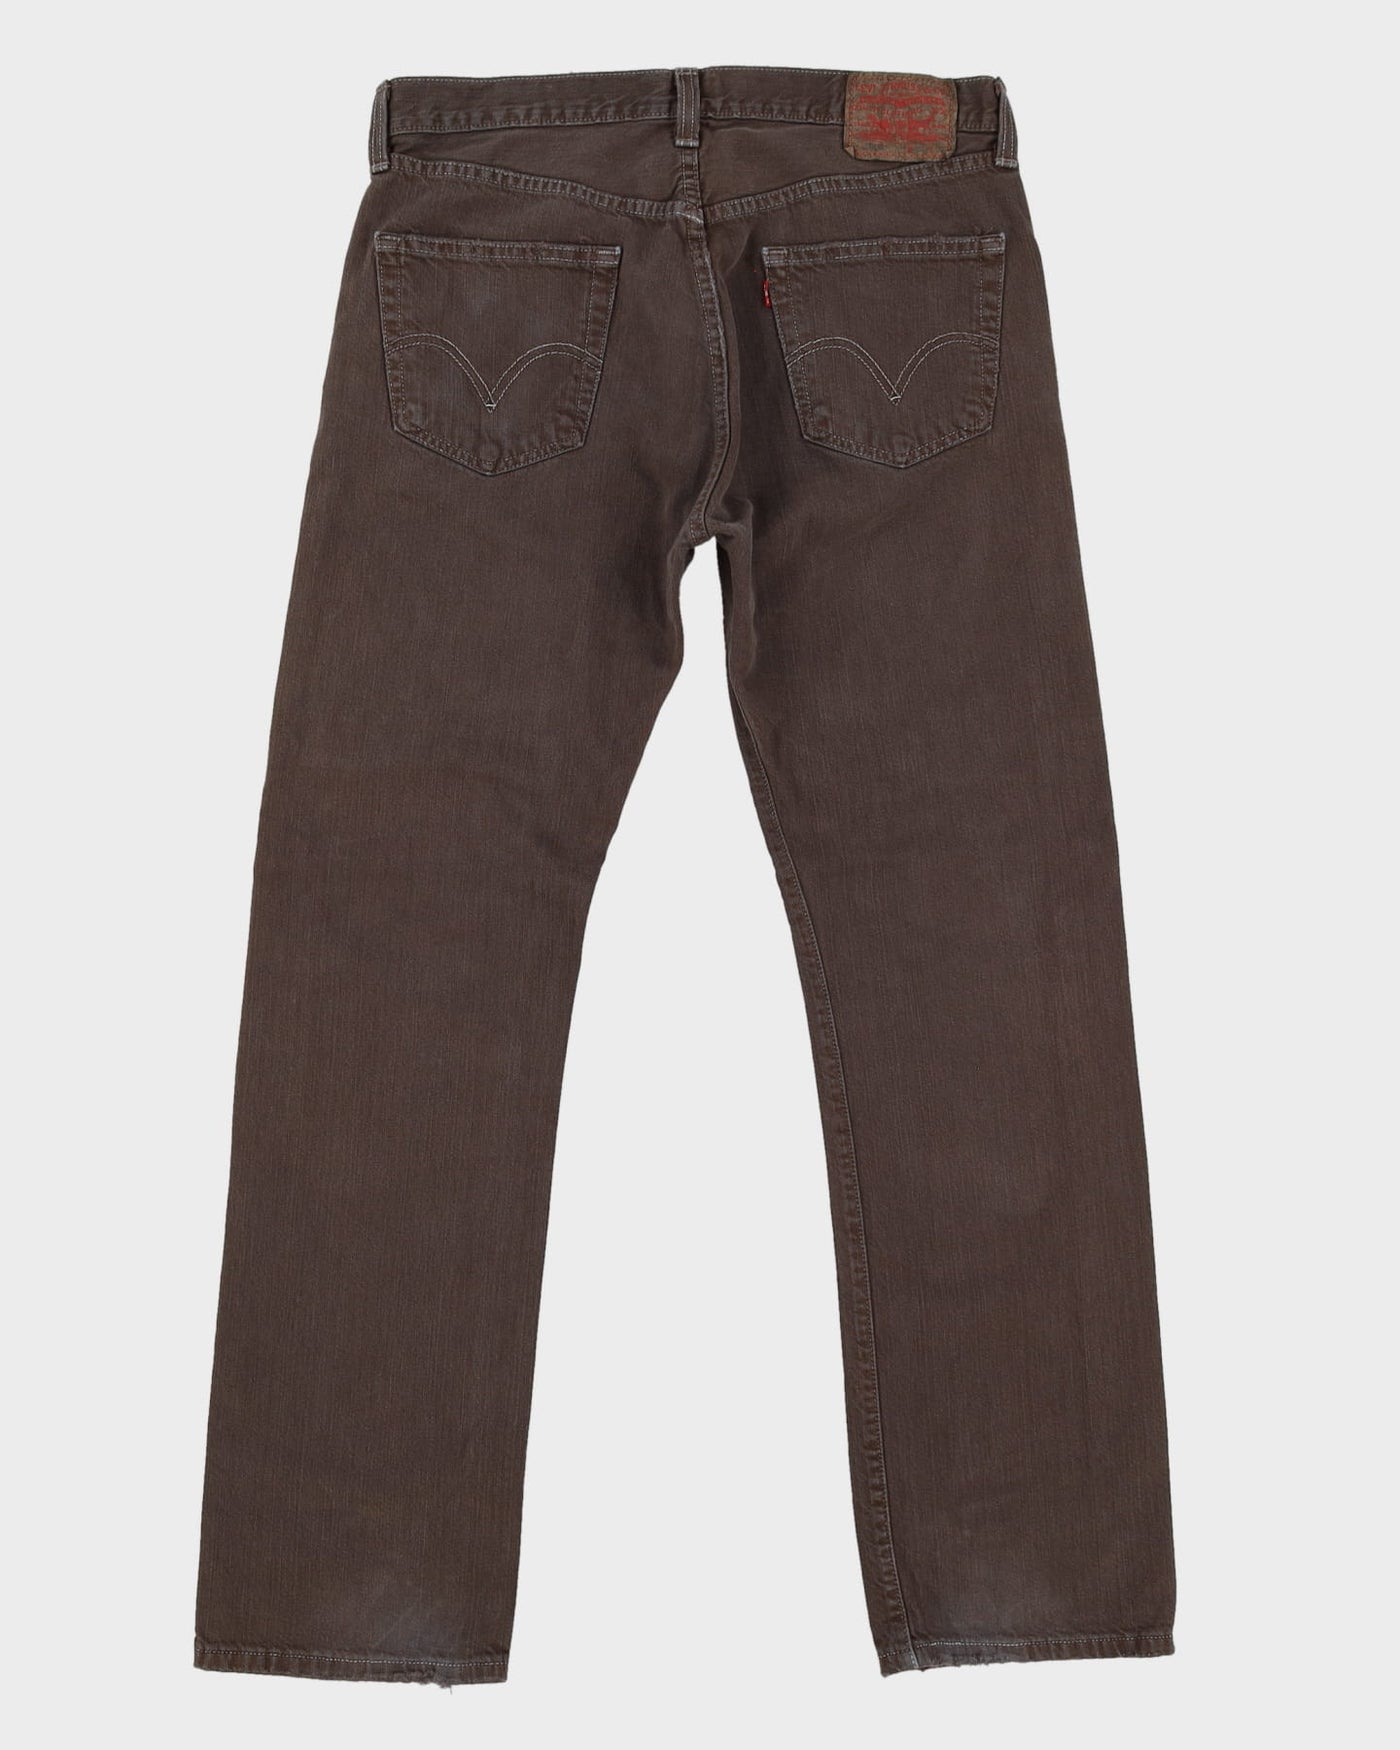 Levi's 501 Brown Jeans - W36 L33